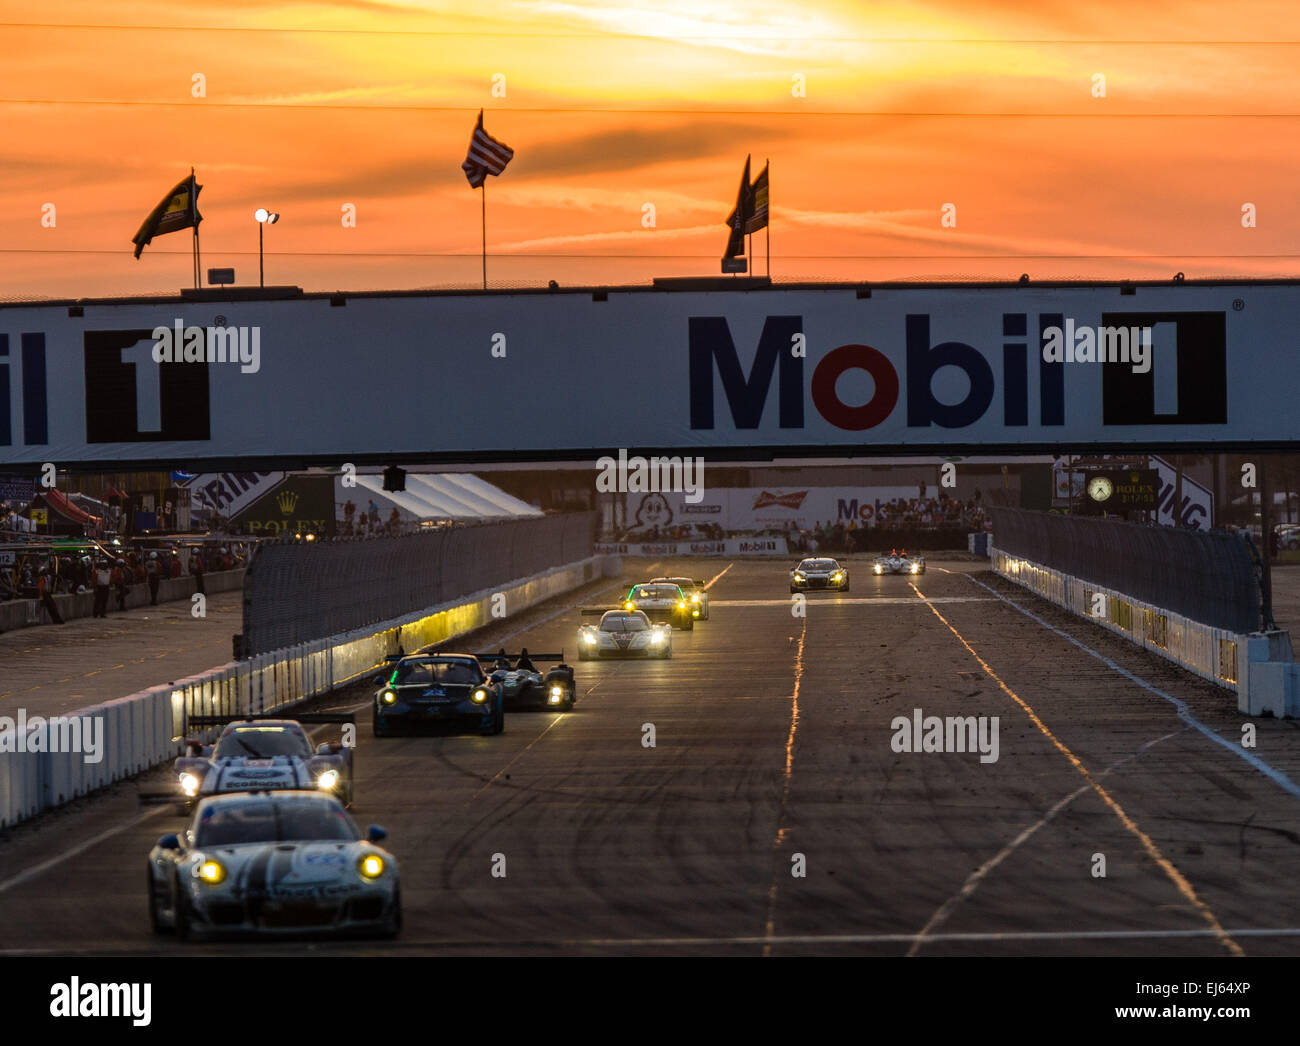 3/21/2015 - Sebring FL, USA - Finish line straightway at the Sebring International Raceway in Sebring FL. DelMecum/Cal Sport Media Stock Photo